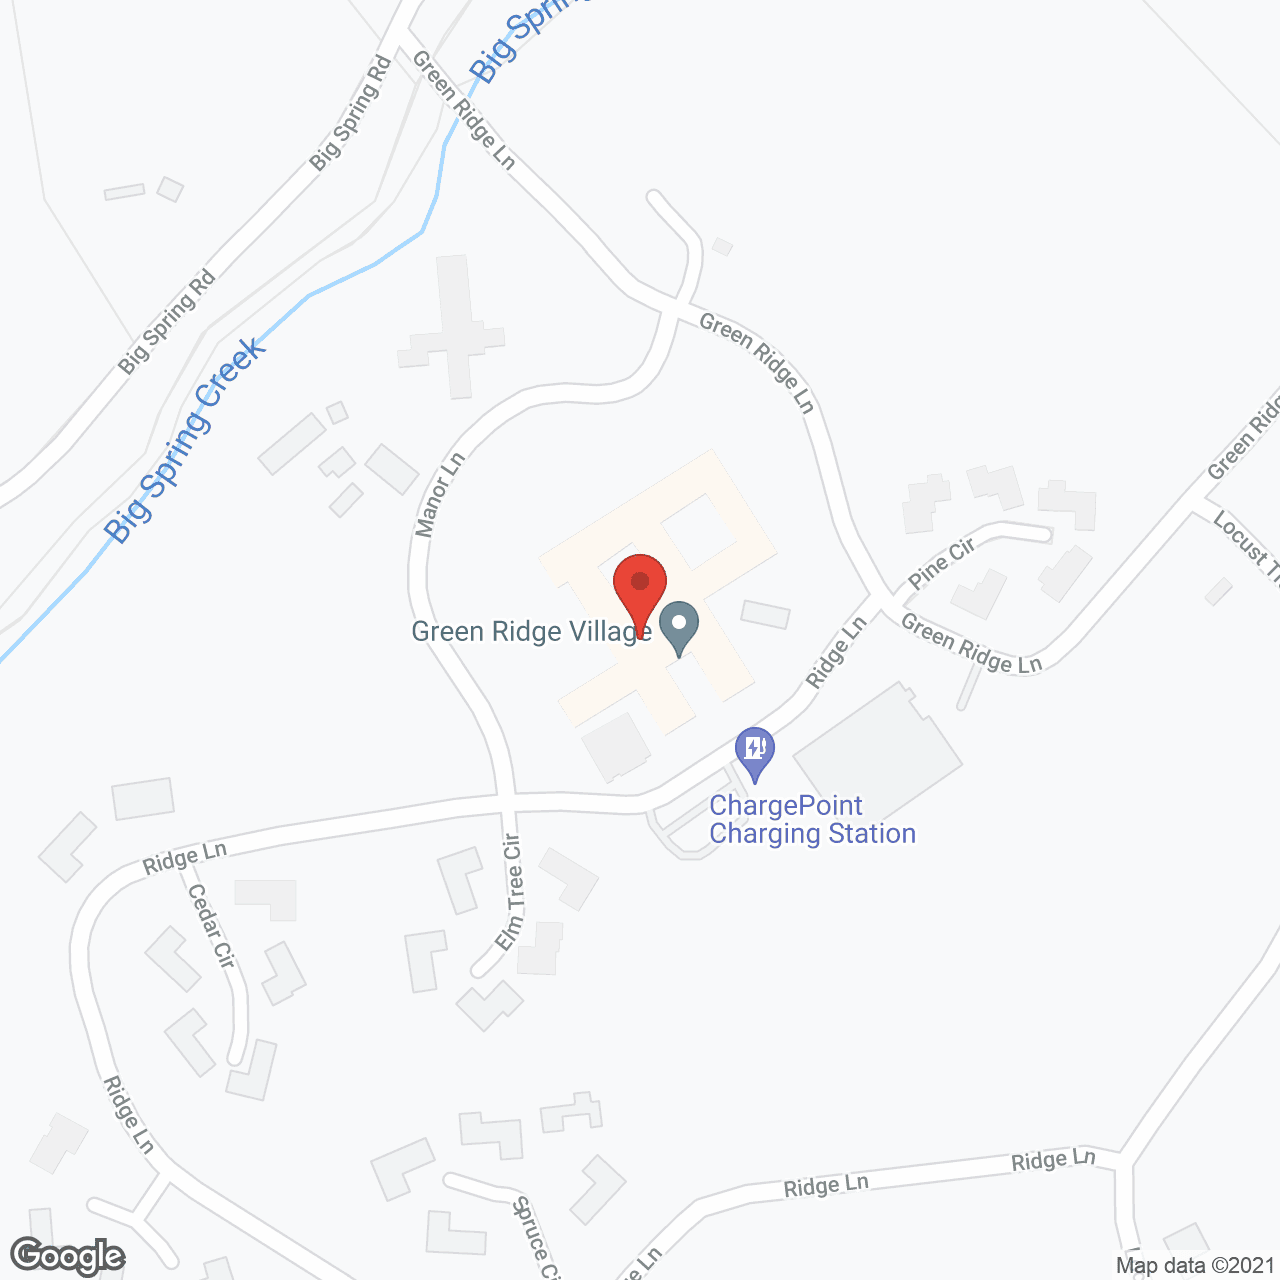 Green Ridge Village in google map